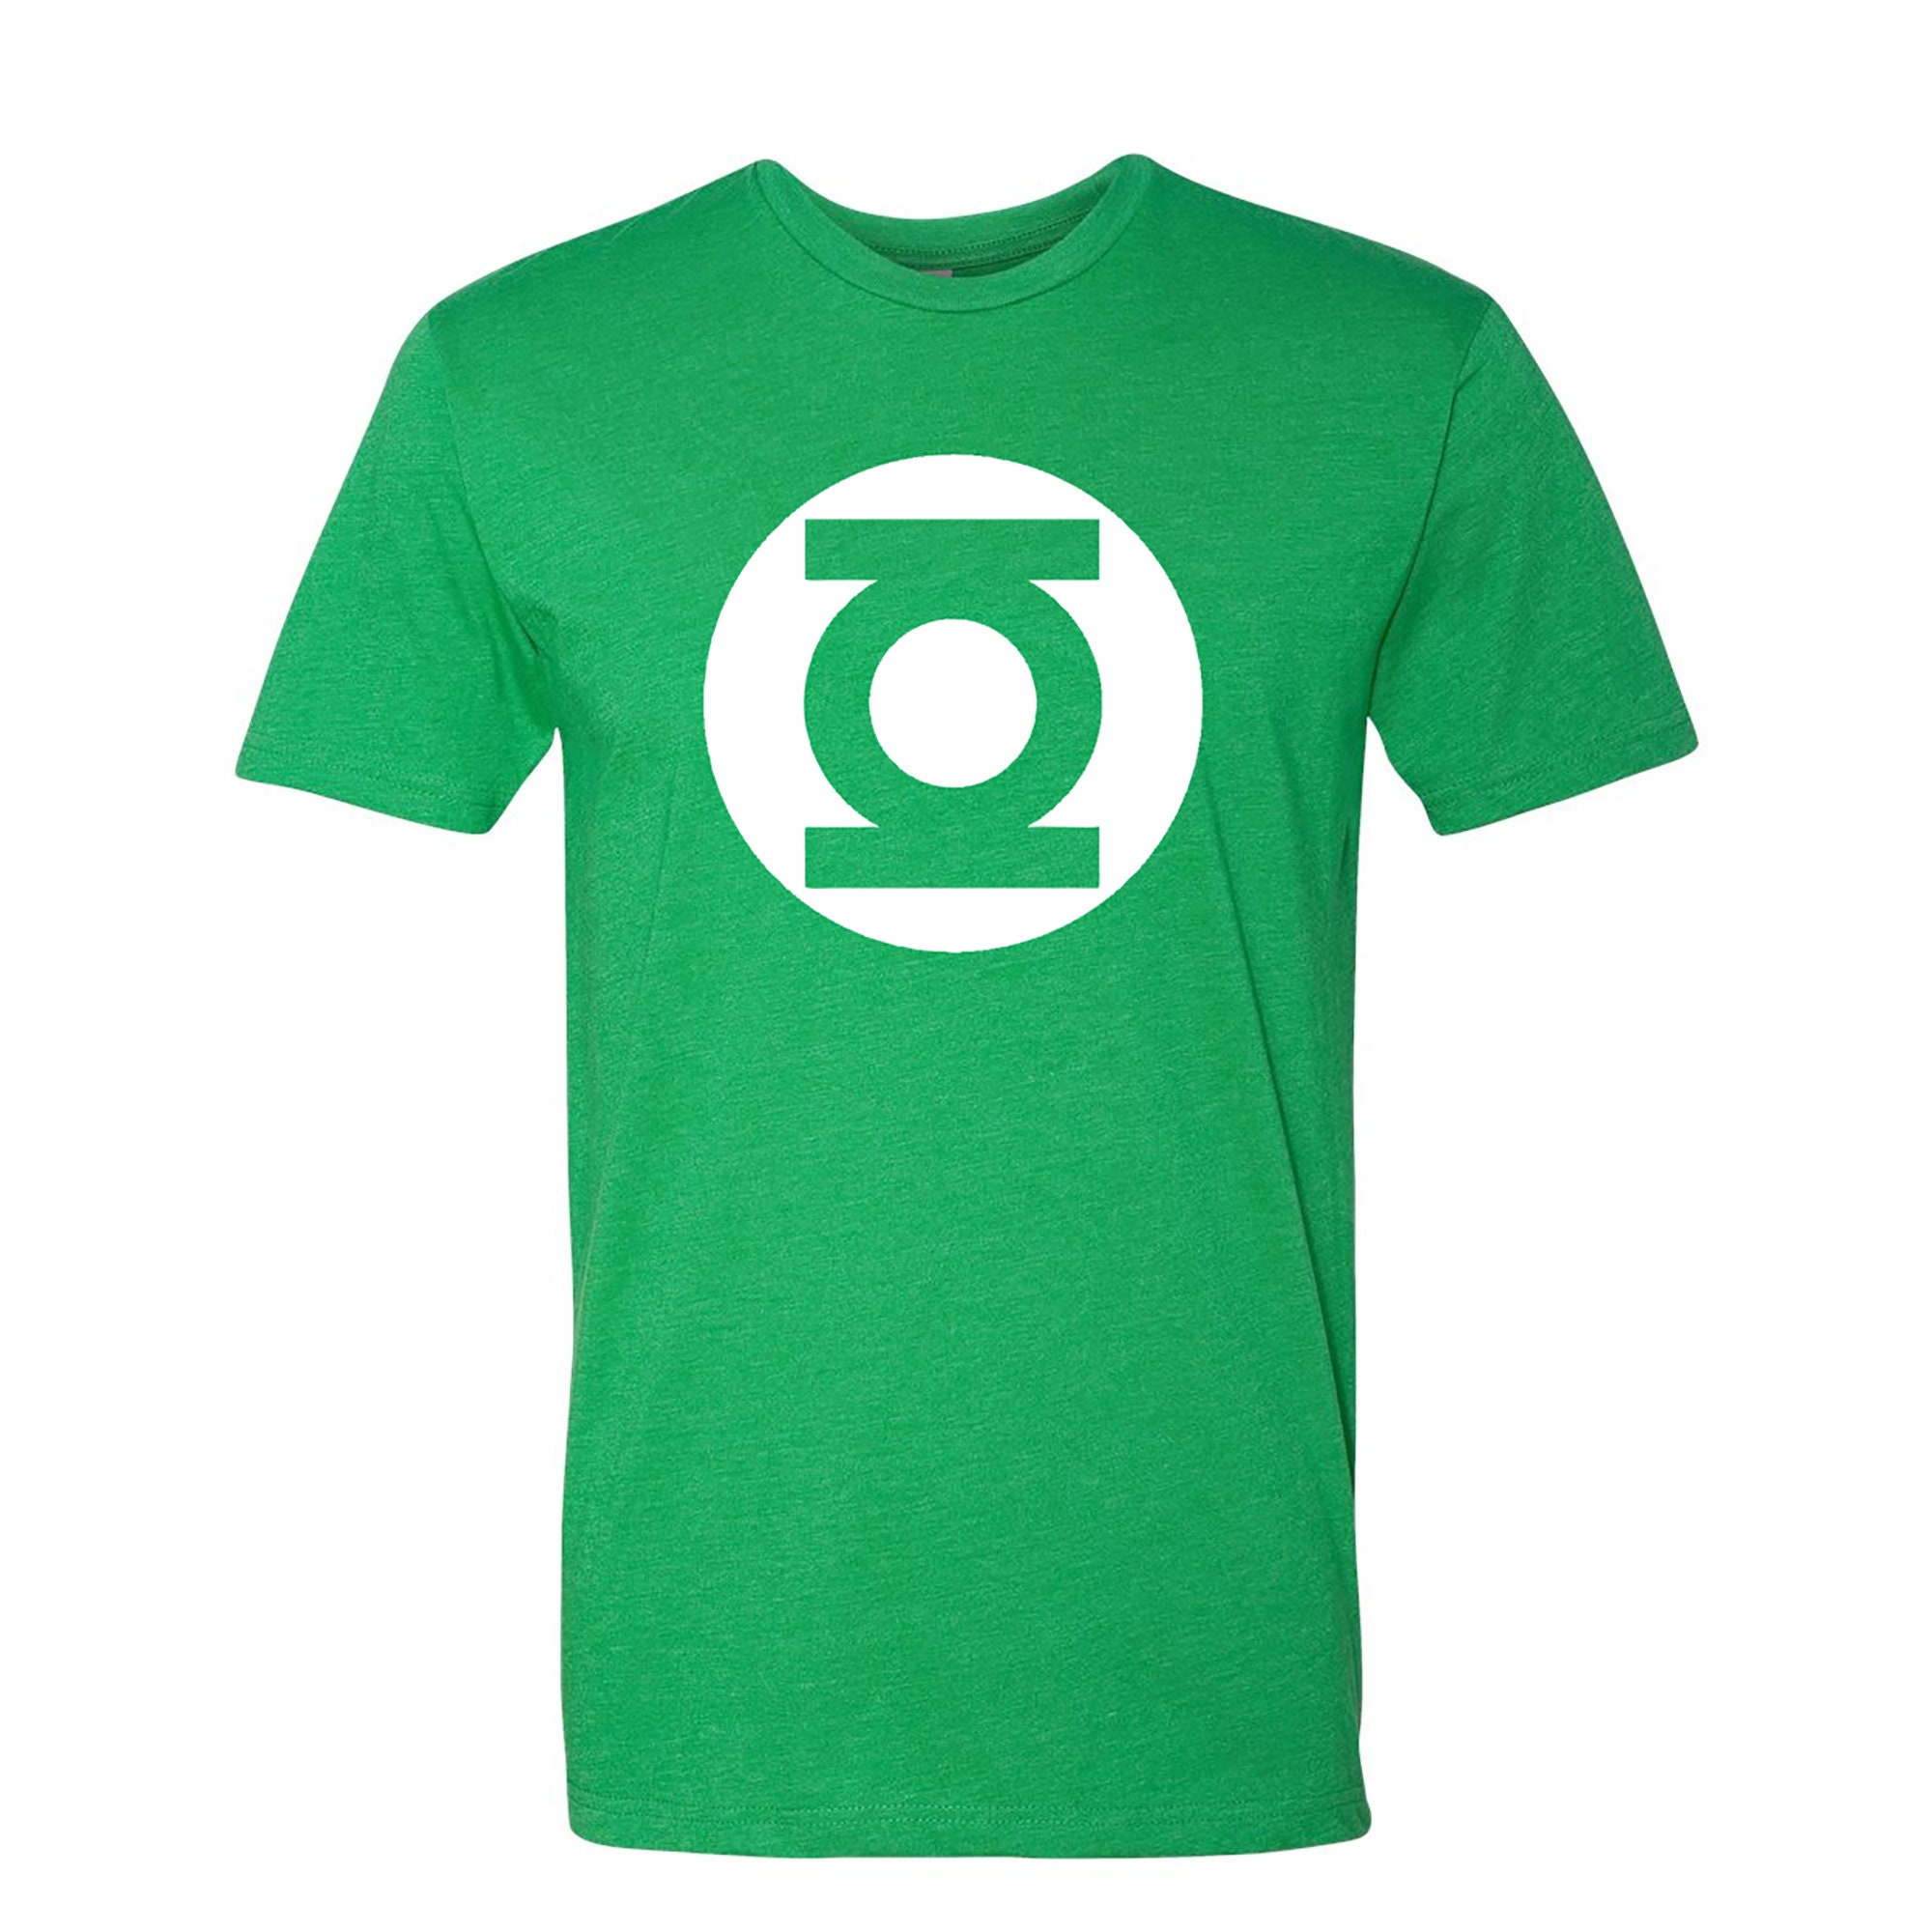 Green Lantern T-shirt - Etsy